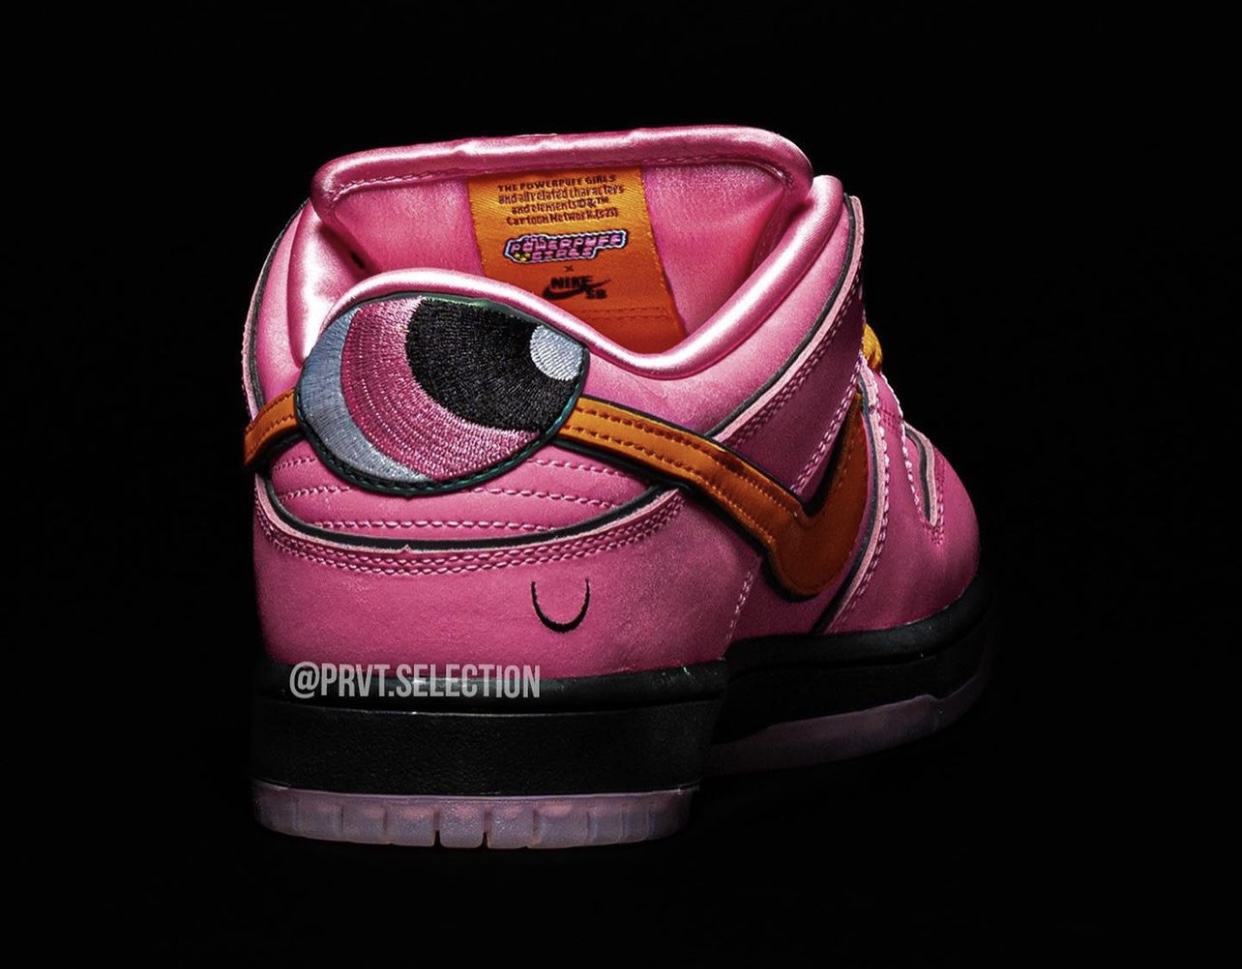 The Powerpuff Girls x Nike SB Dunk Low eye logo heel